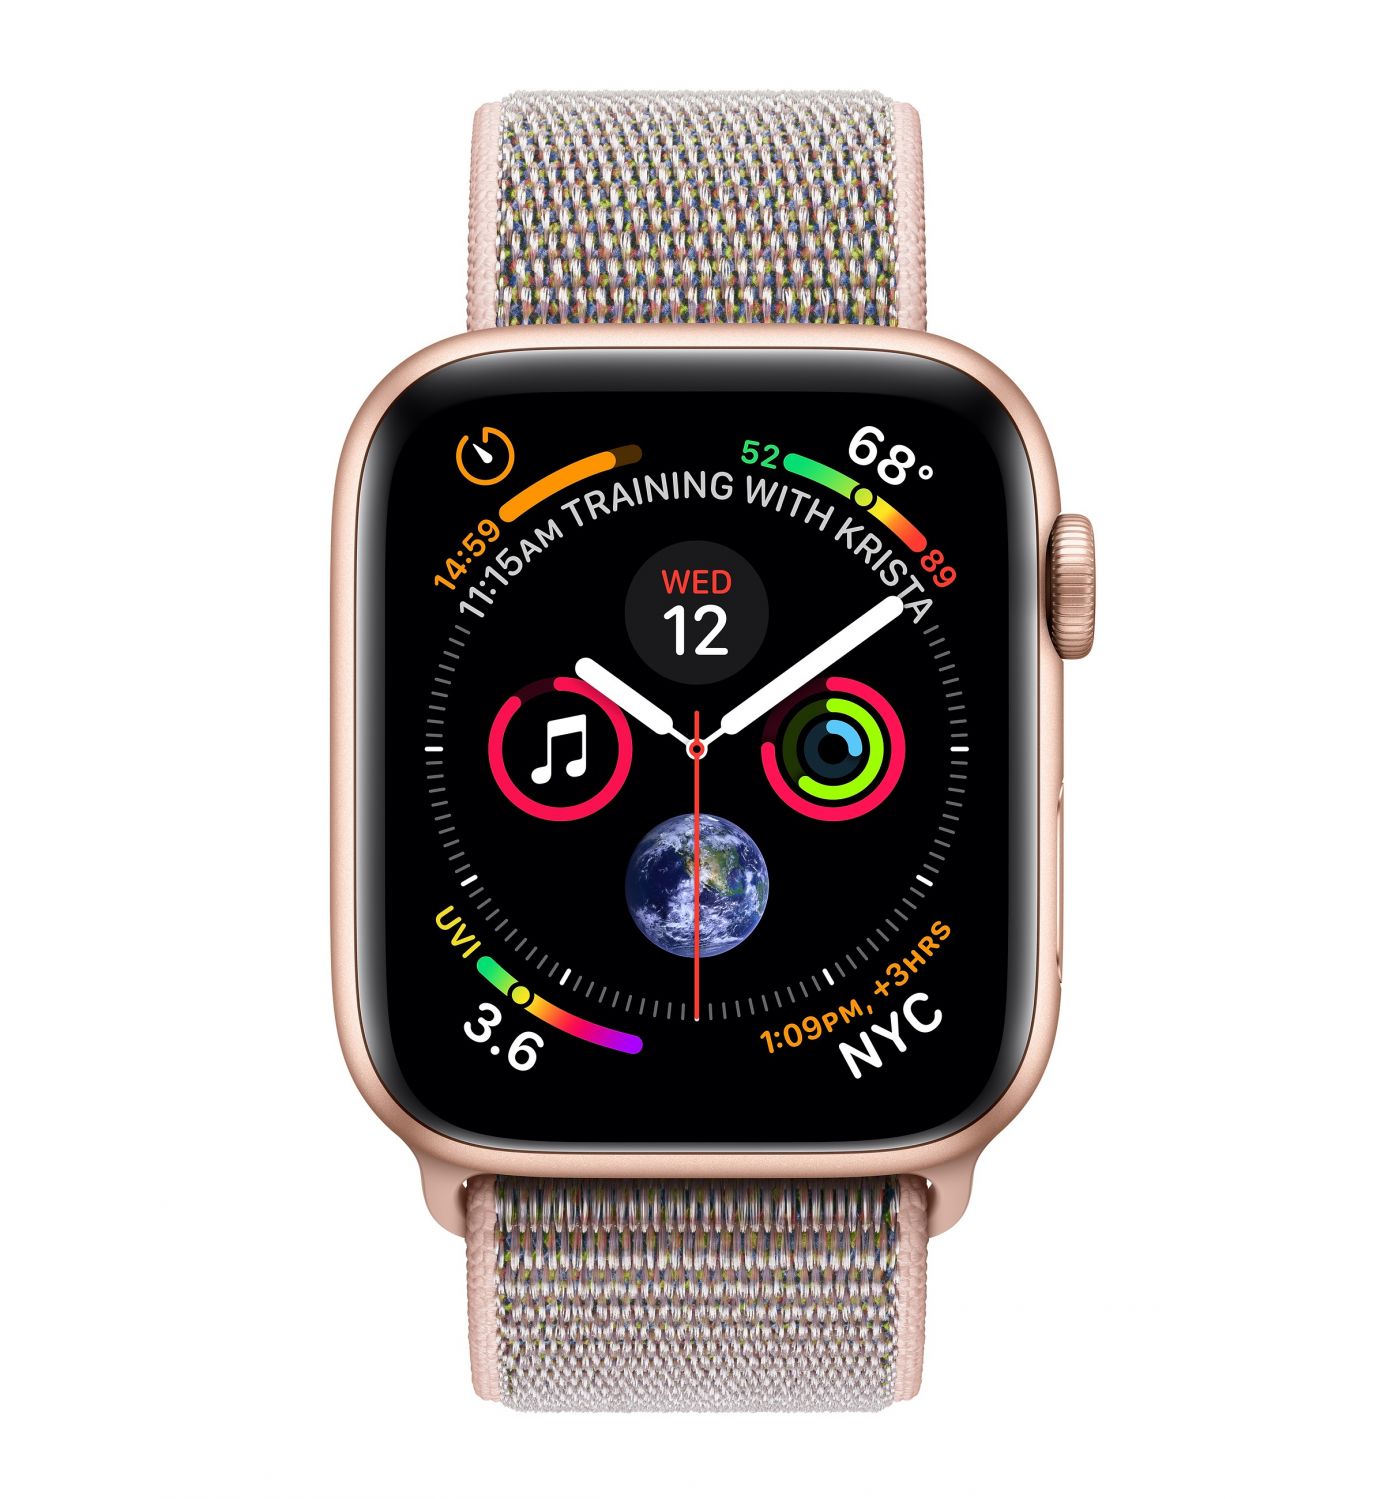 MTVH2TY/A - Reloj inteligent Apple Watch Seri 4 reloj inteligente Oro OLED Mvil GP (satlite)